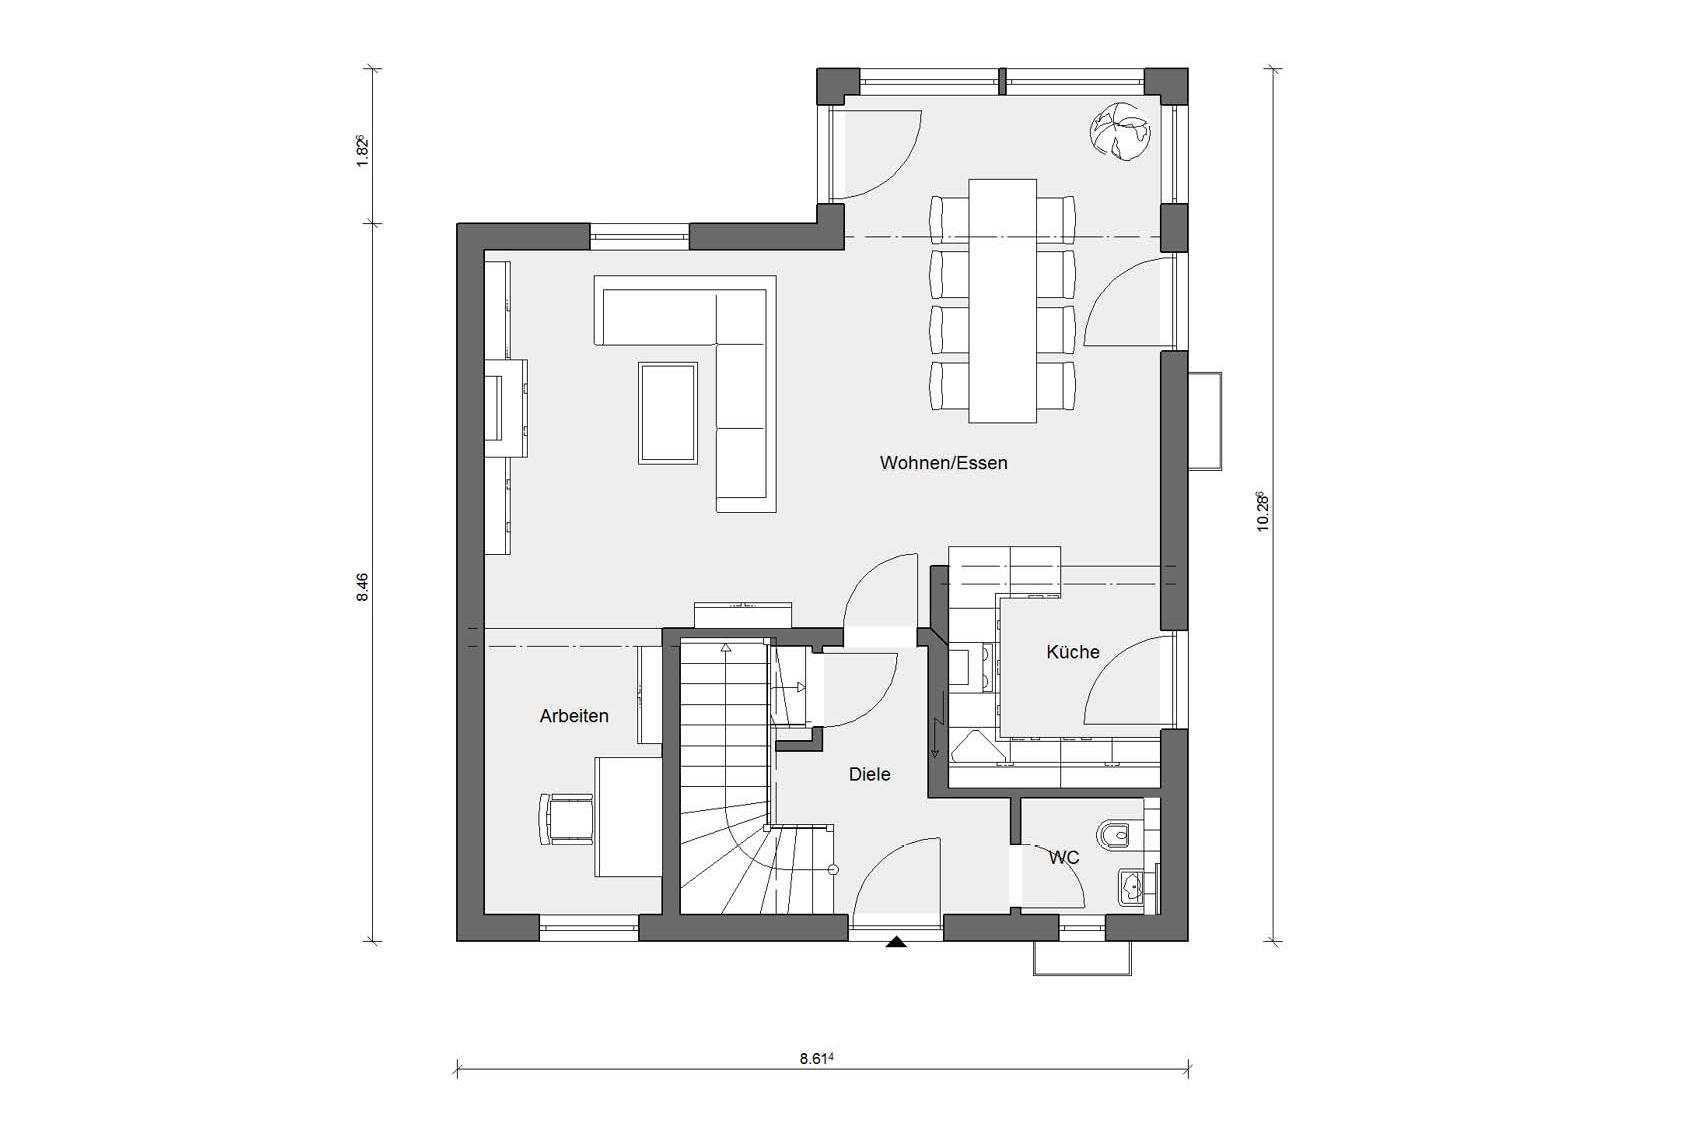 Ground floor layout E 15-126.7 Attractive architecture